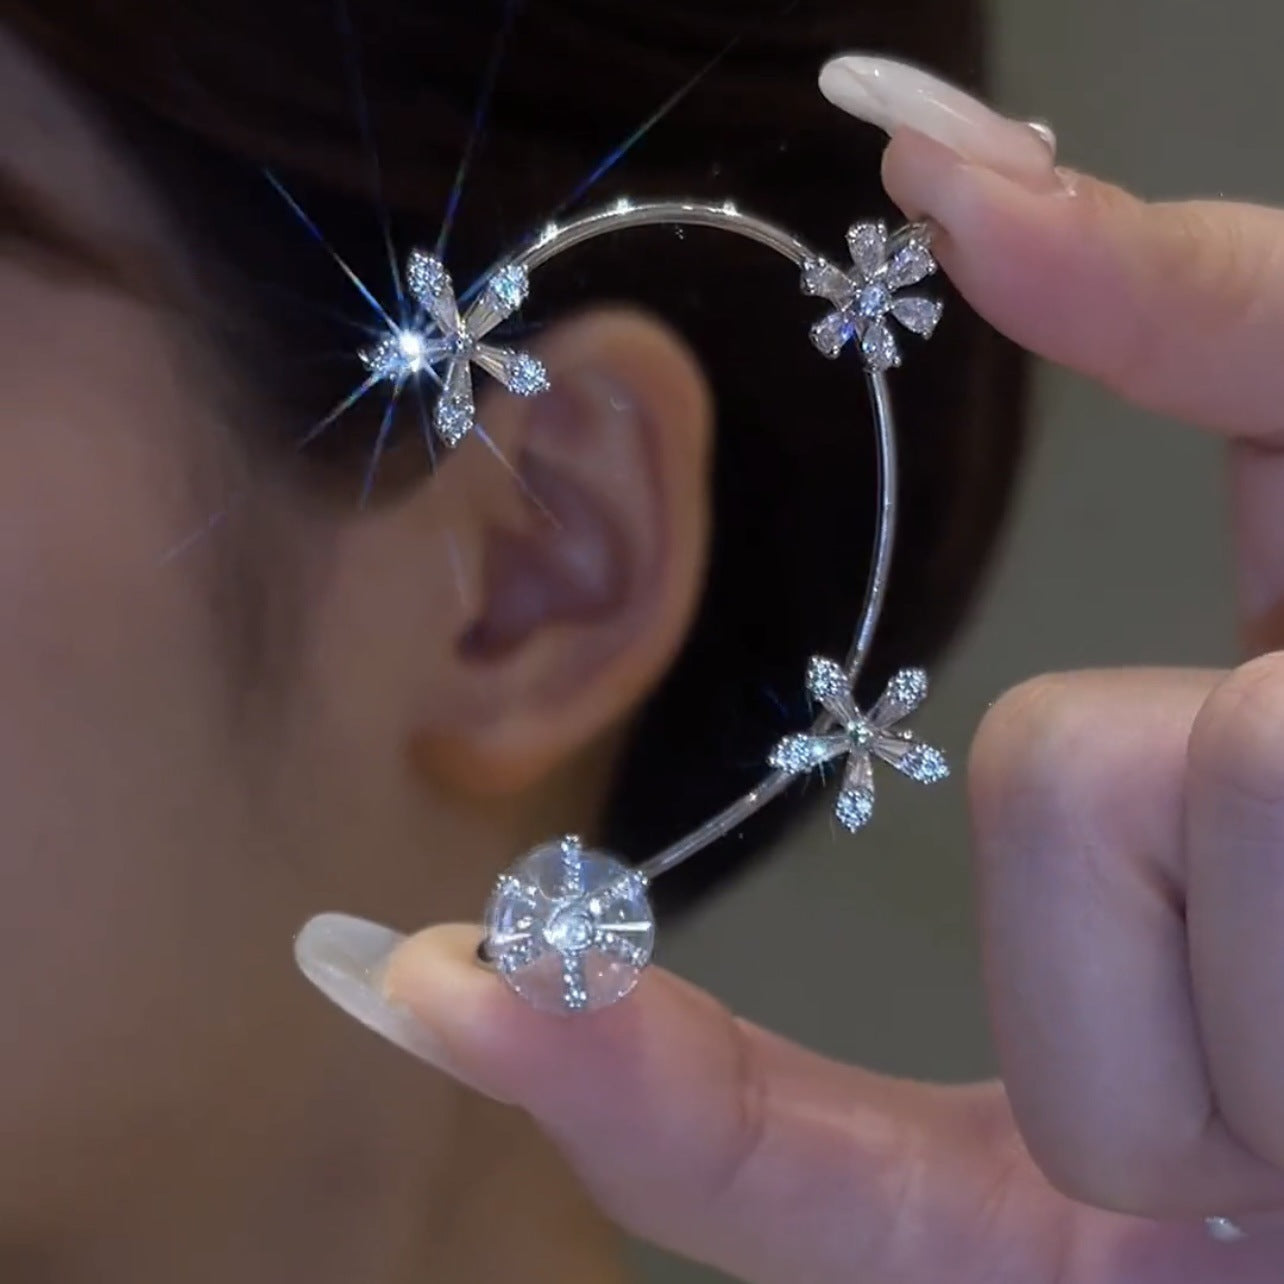 A Pair Of Rotating Flower Earrings Without Pierced Ear Clips Earrings